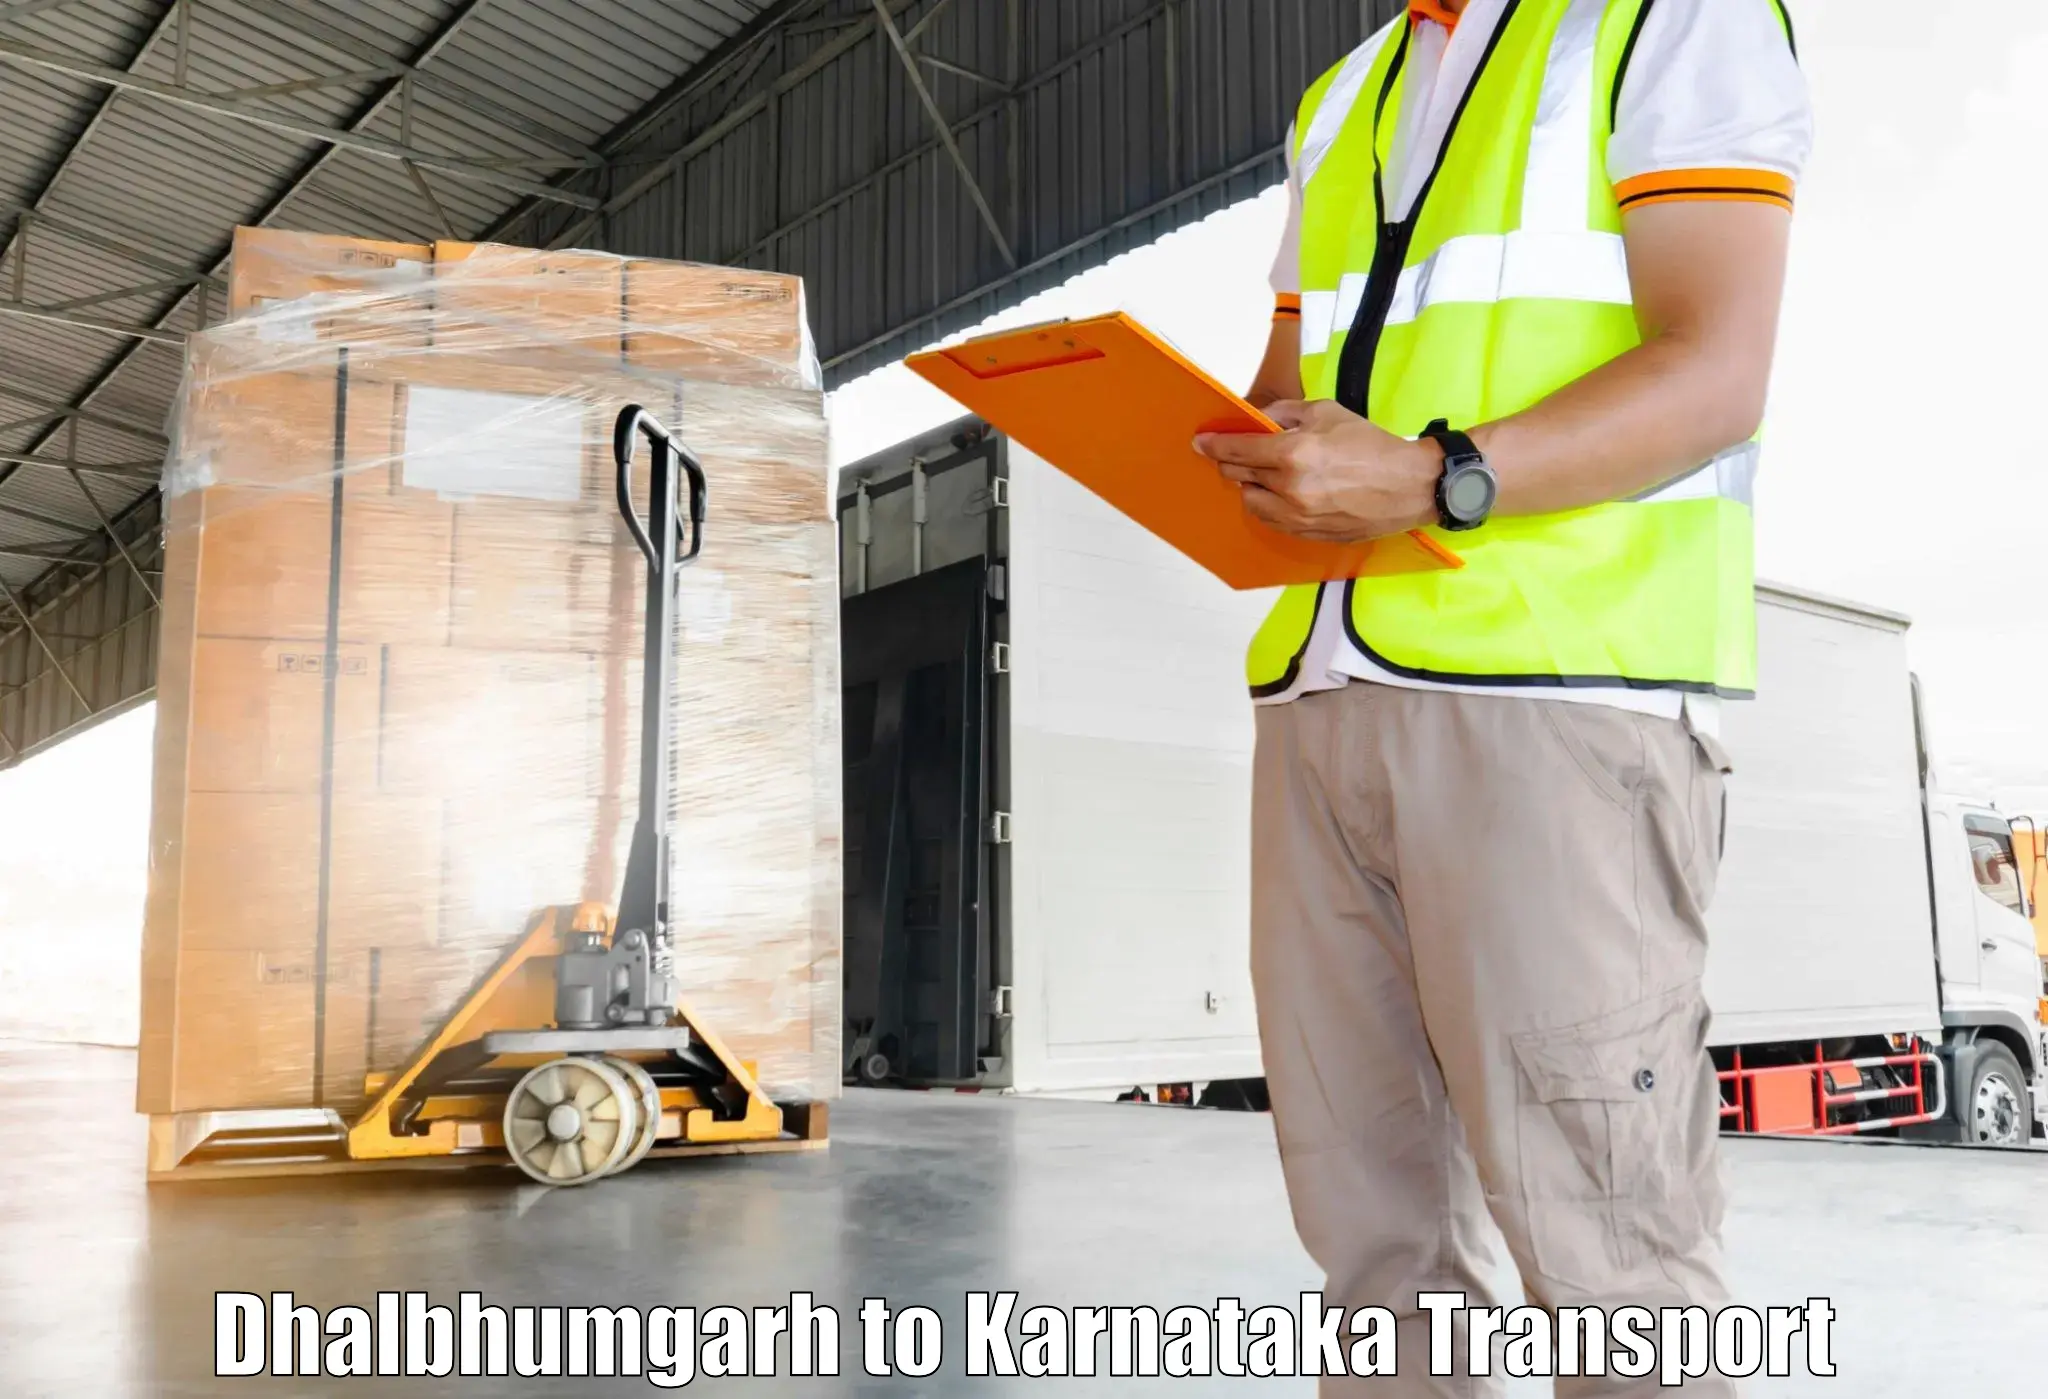 All India transport service Dhalbhumgarh to Karnataka